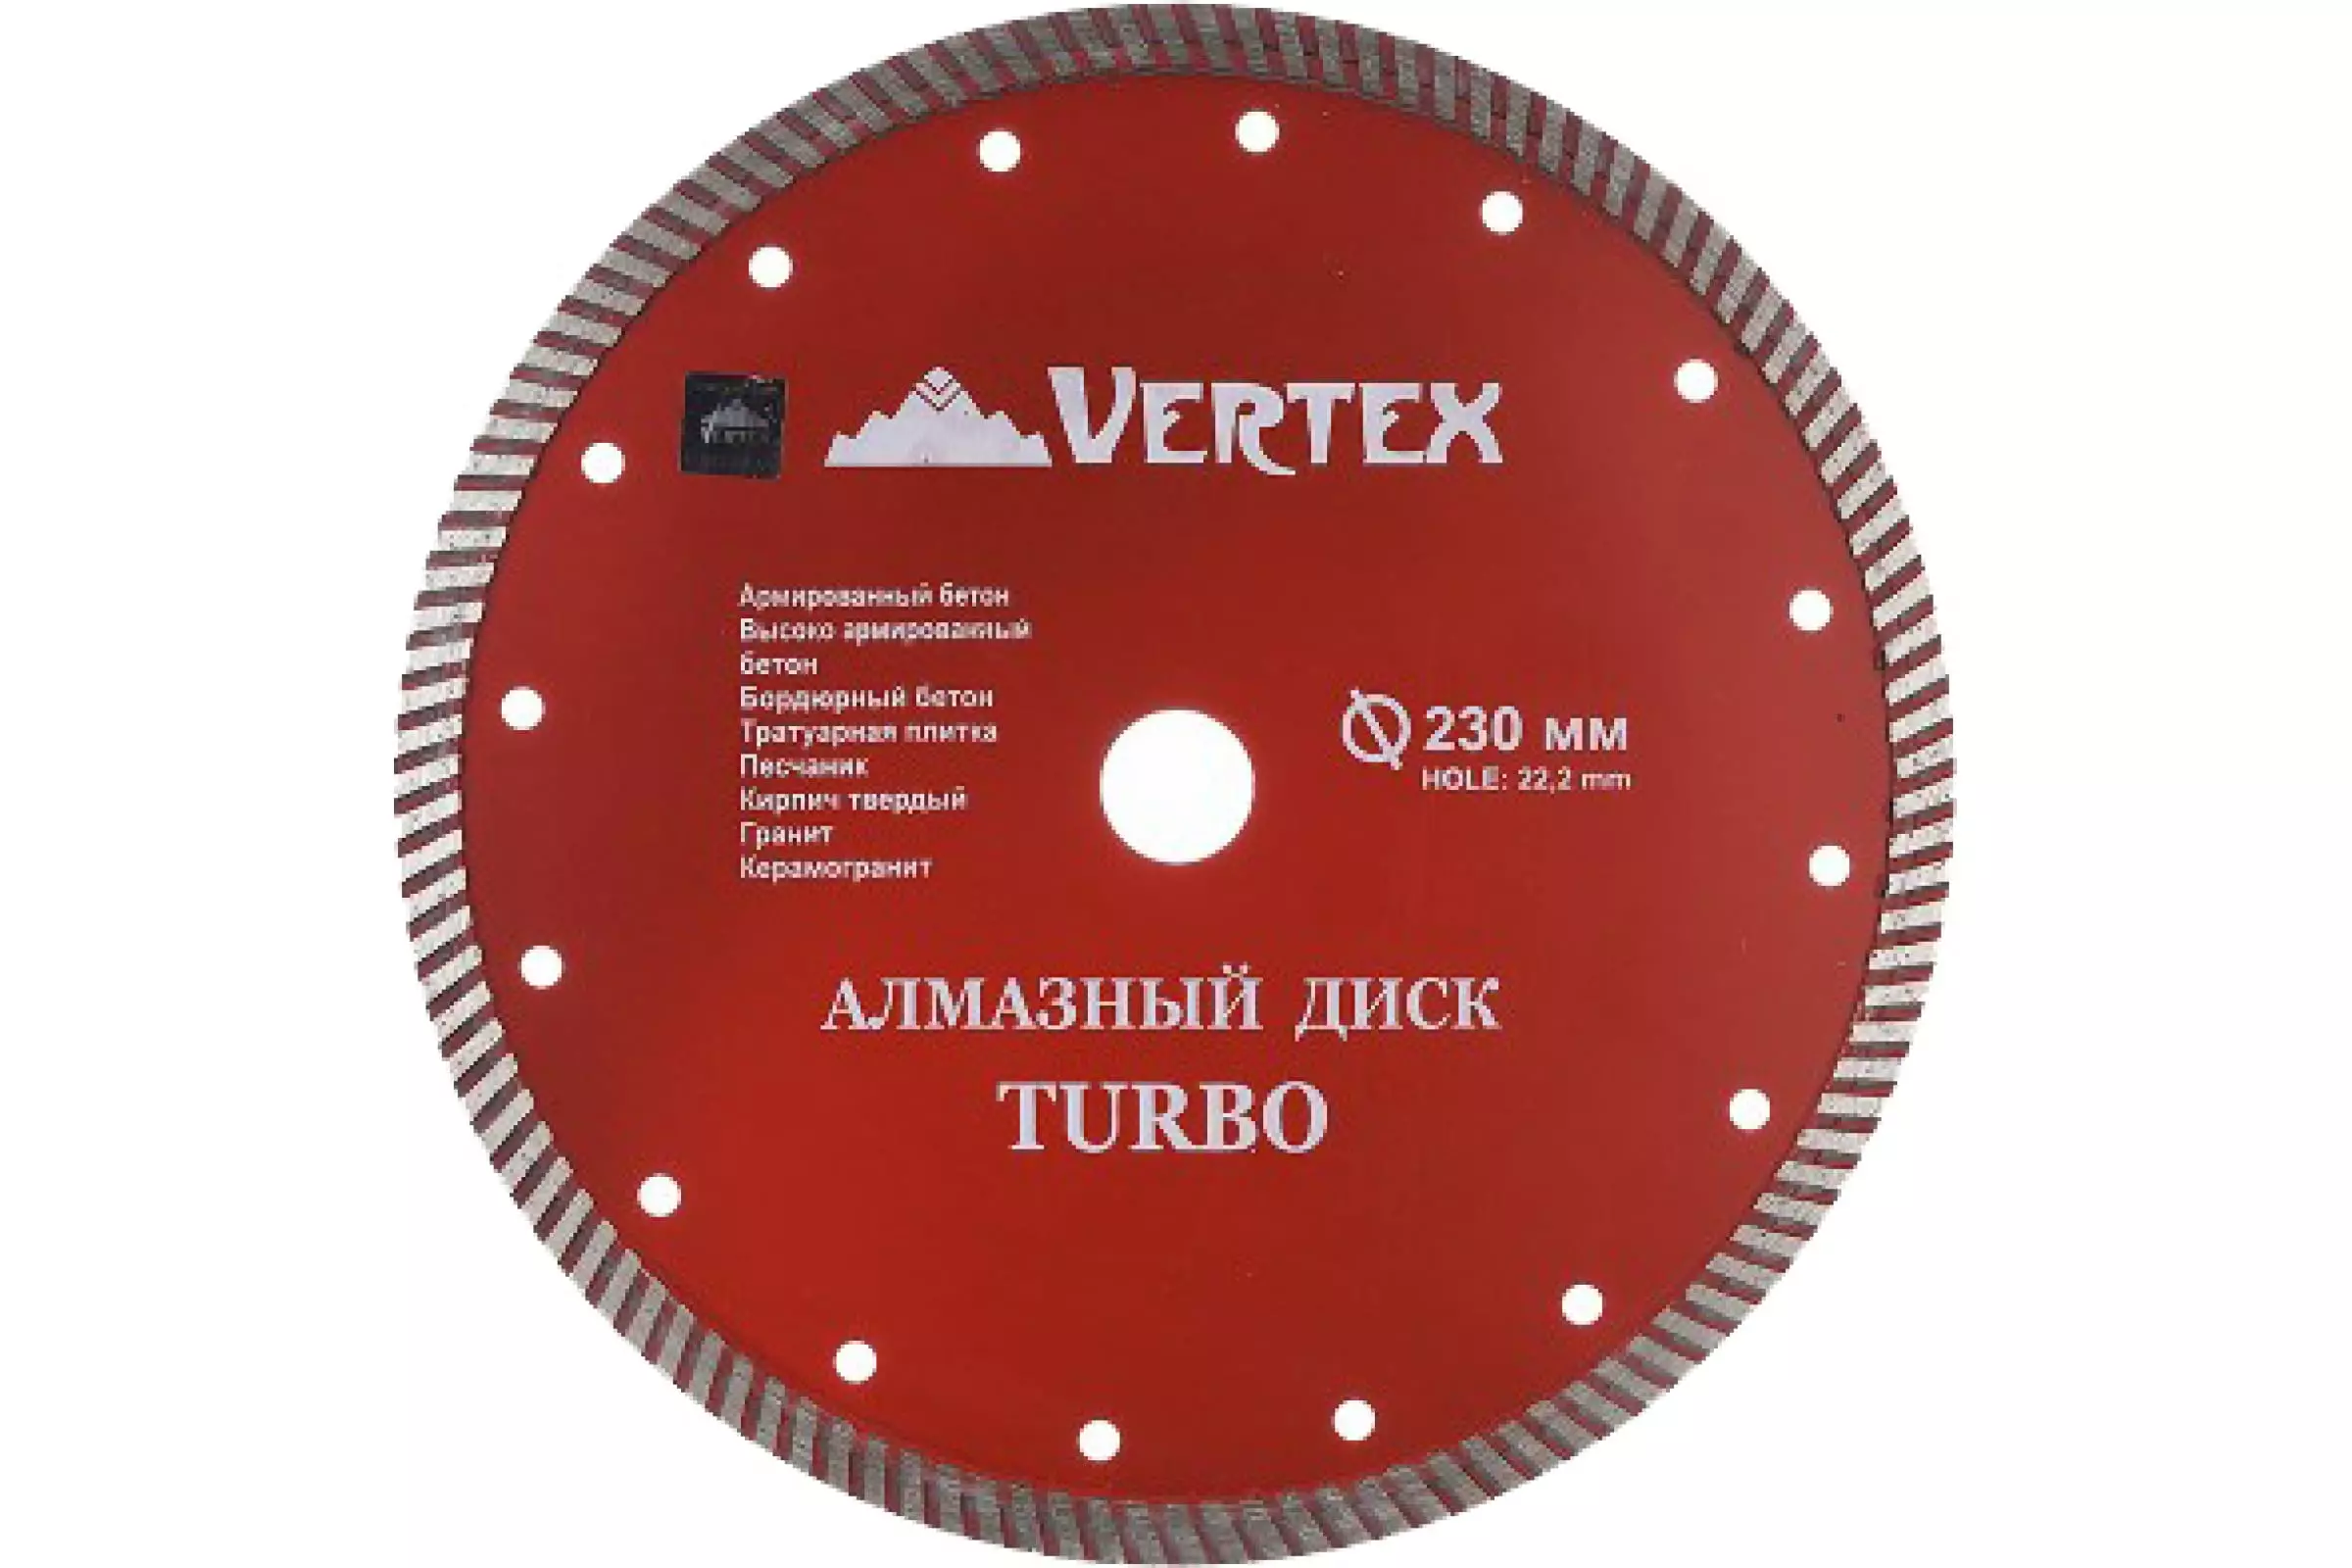 Алмазный диск 230х22,2х2,4 Vertextools 04-230-2 турбо сухой рез